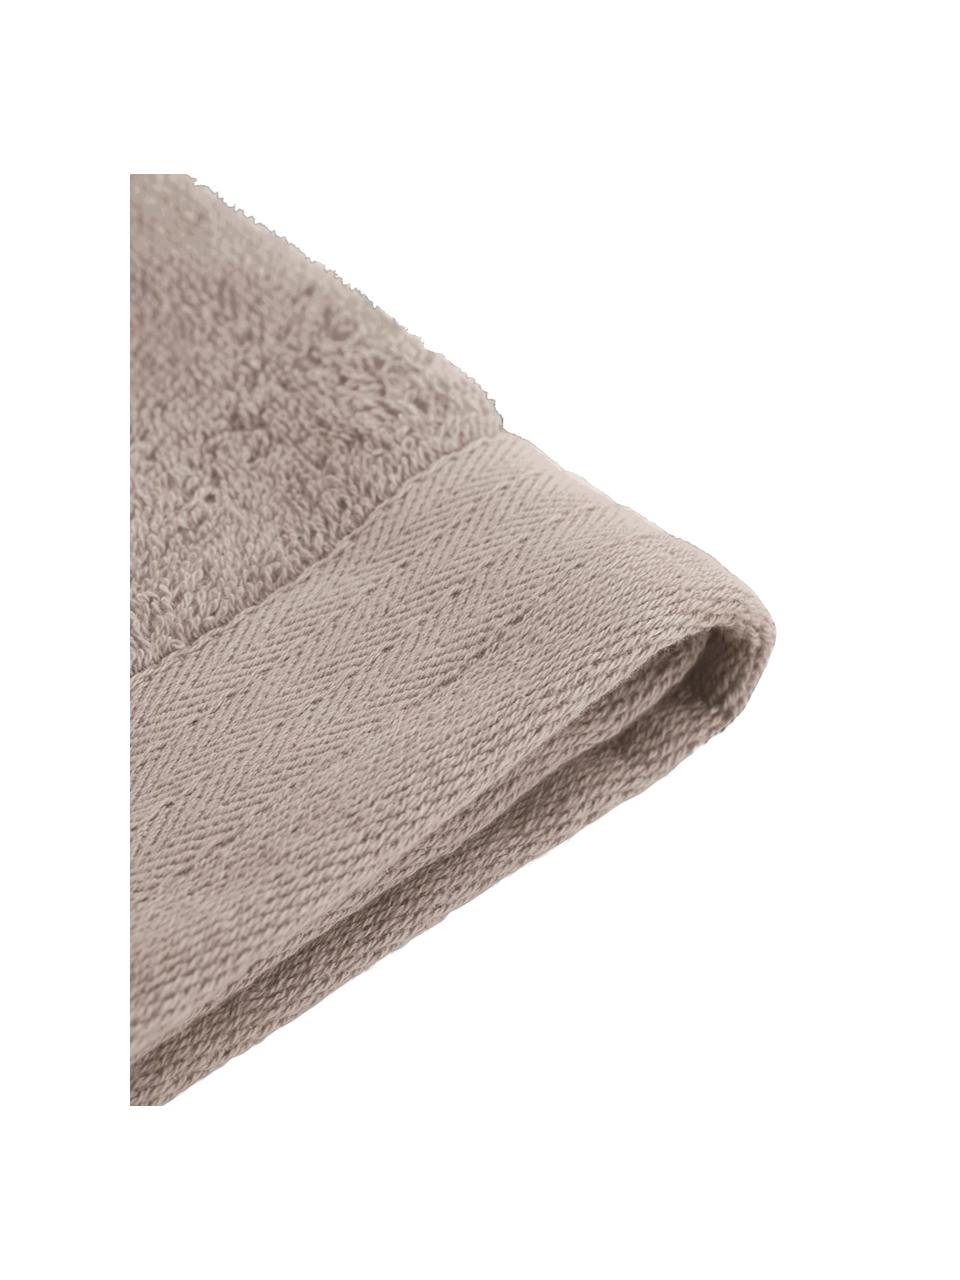 Handdoek Soft Cotton, Katoen, middelzware kwaliteit, 550 g/m², Taupe, Gastendoekje